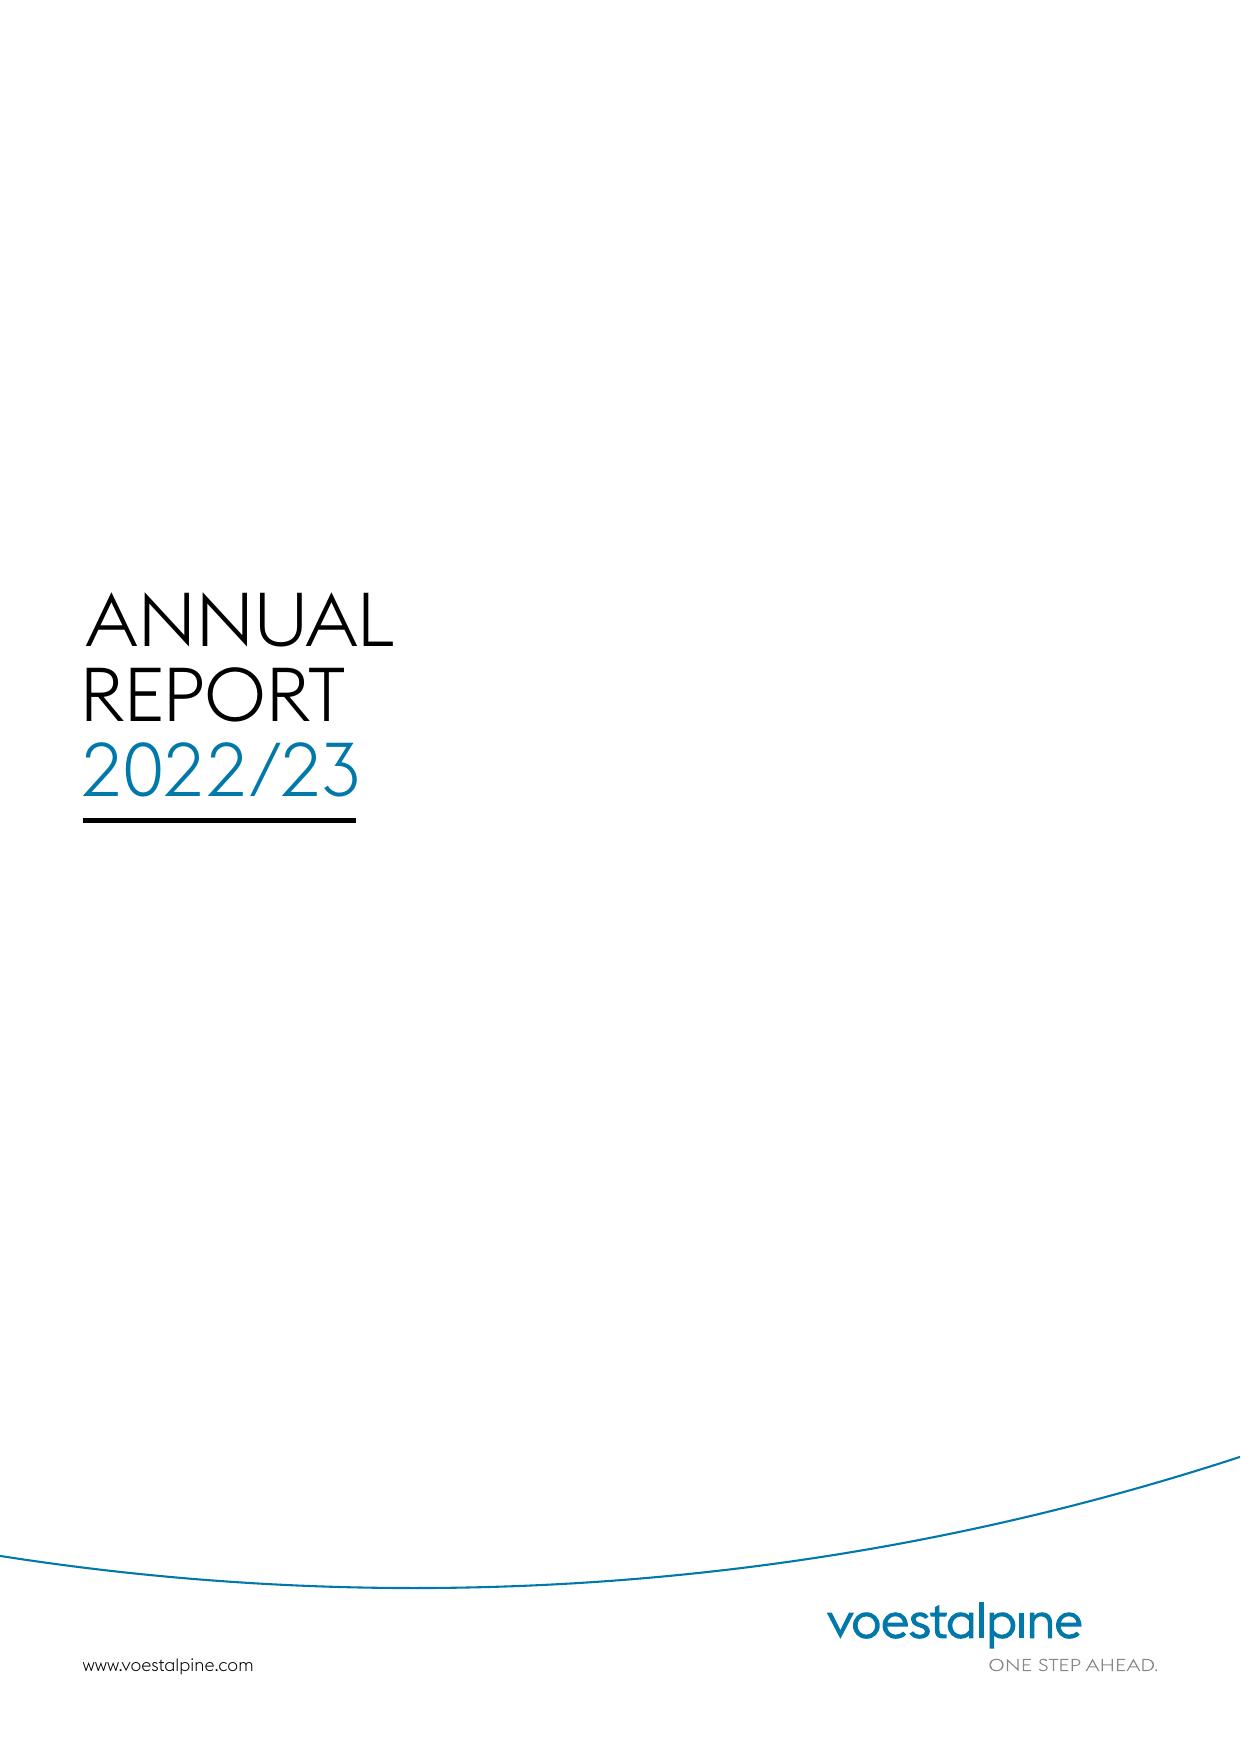 VOESTALPINE 2022 Annual Report